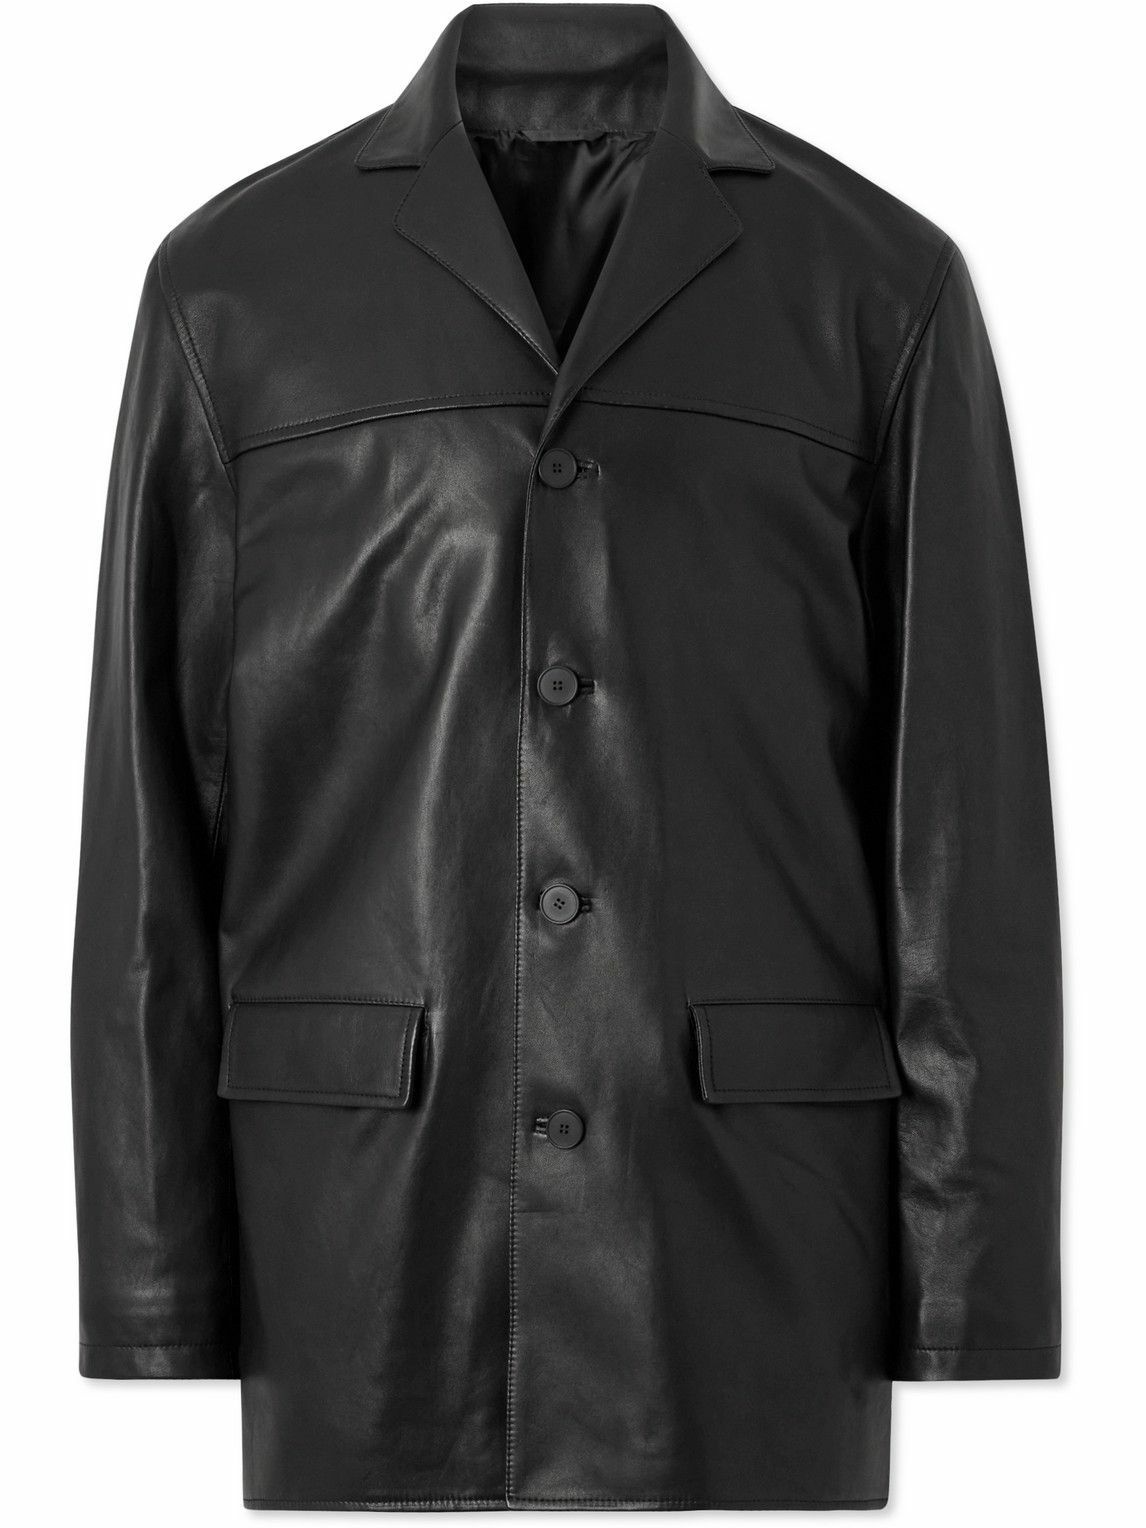 Givenchy - Leather Jacket - Black Givenchy